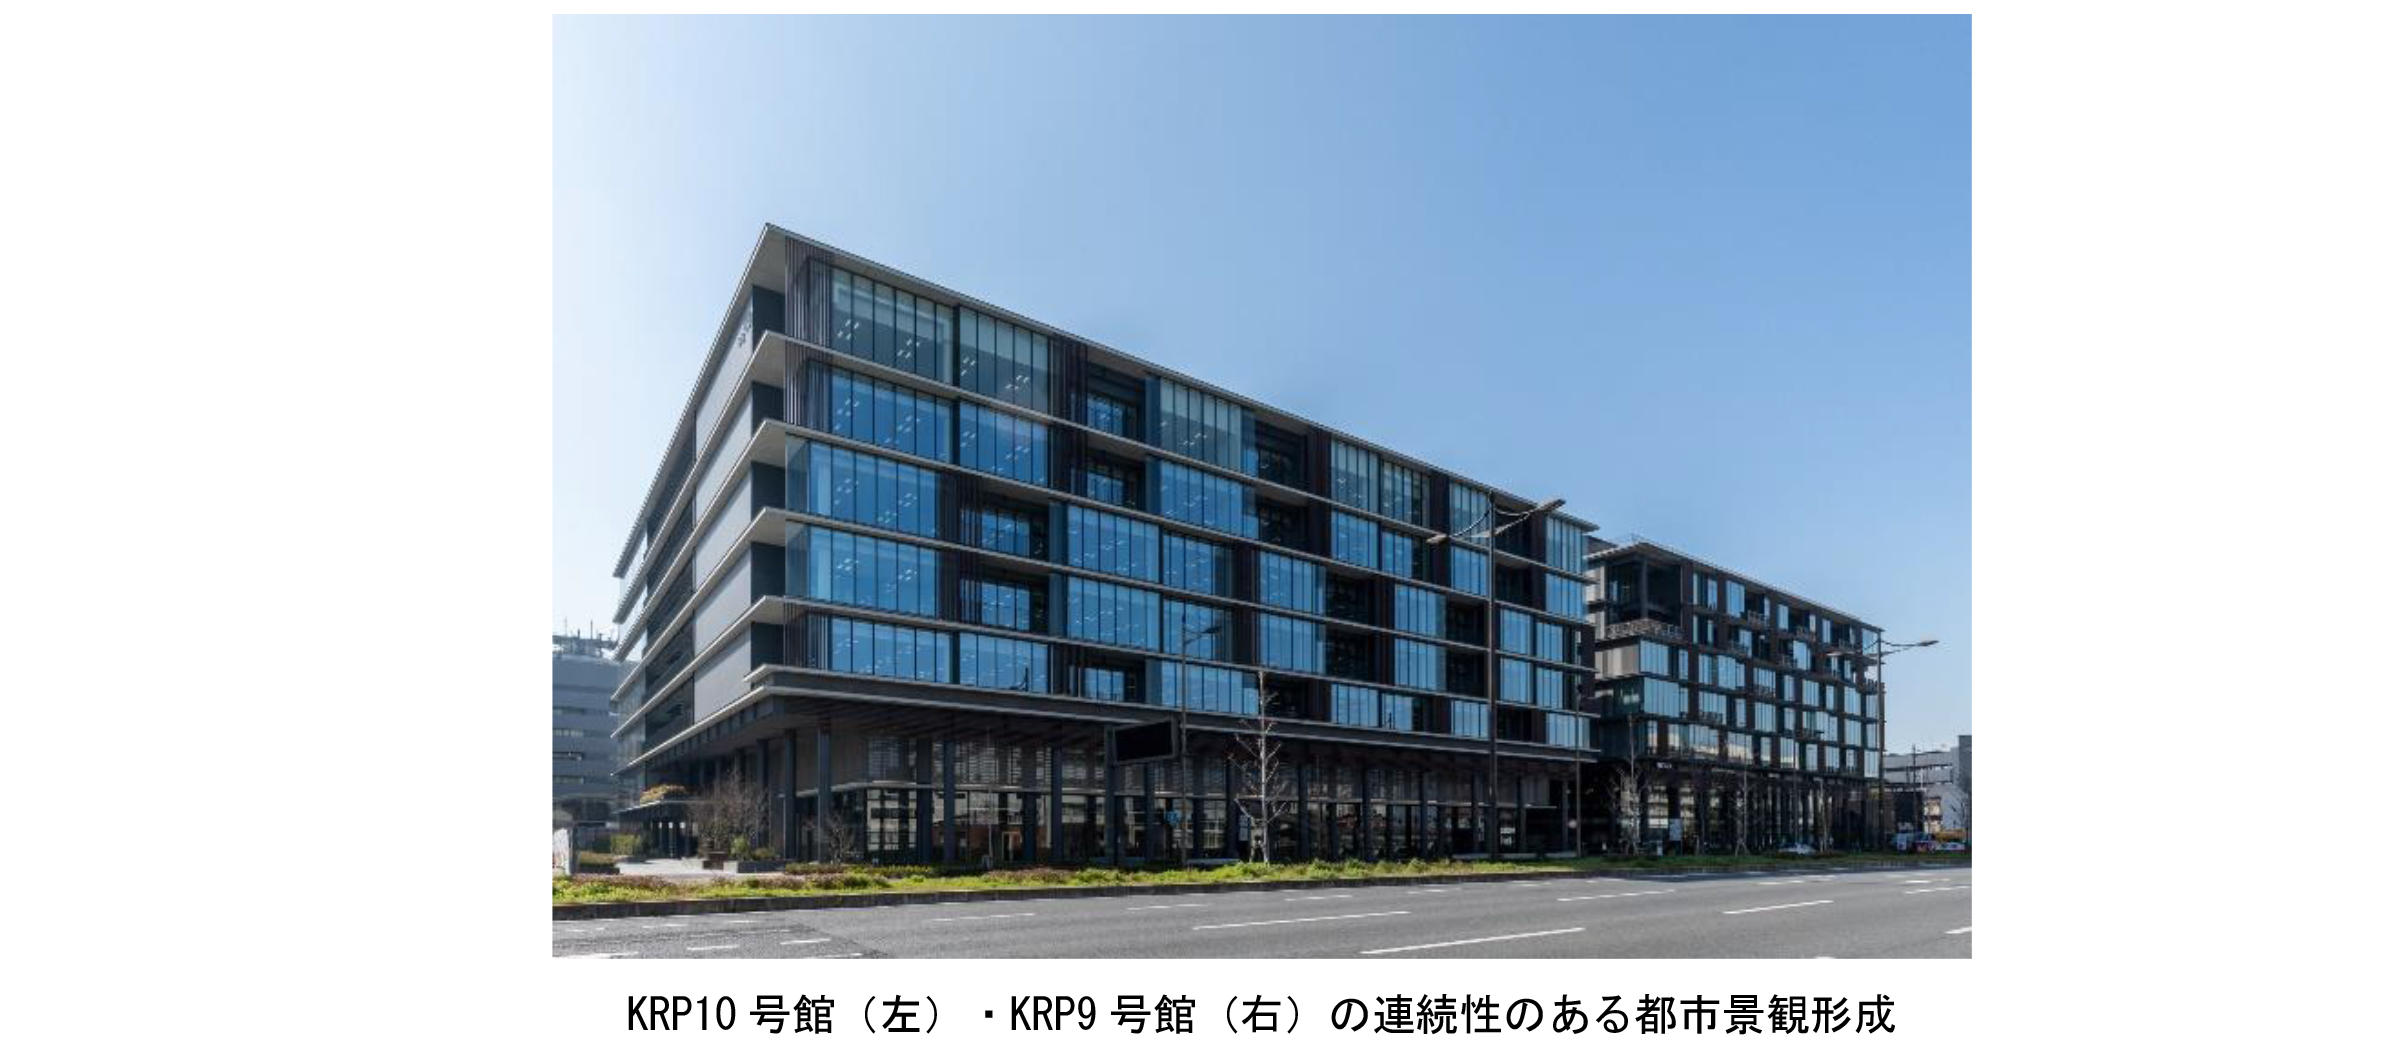 「KRP10号館」竣工1階フードエリアは2021年4月28日グランドオープン！